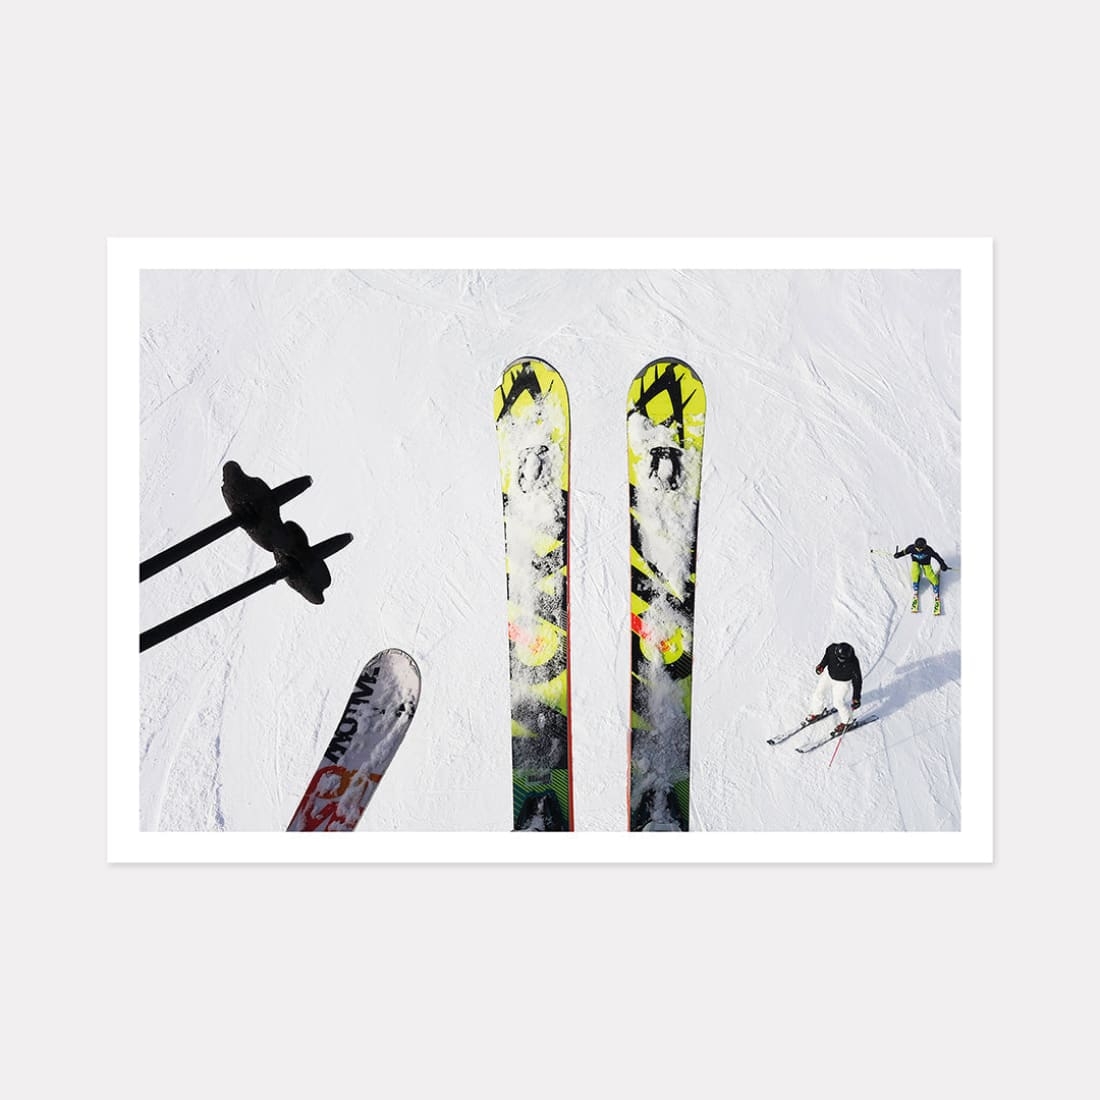 Follow me Ski Art Print, A2 (59.4cm x 42cm) unframed print – Powderhound